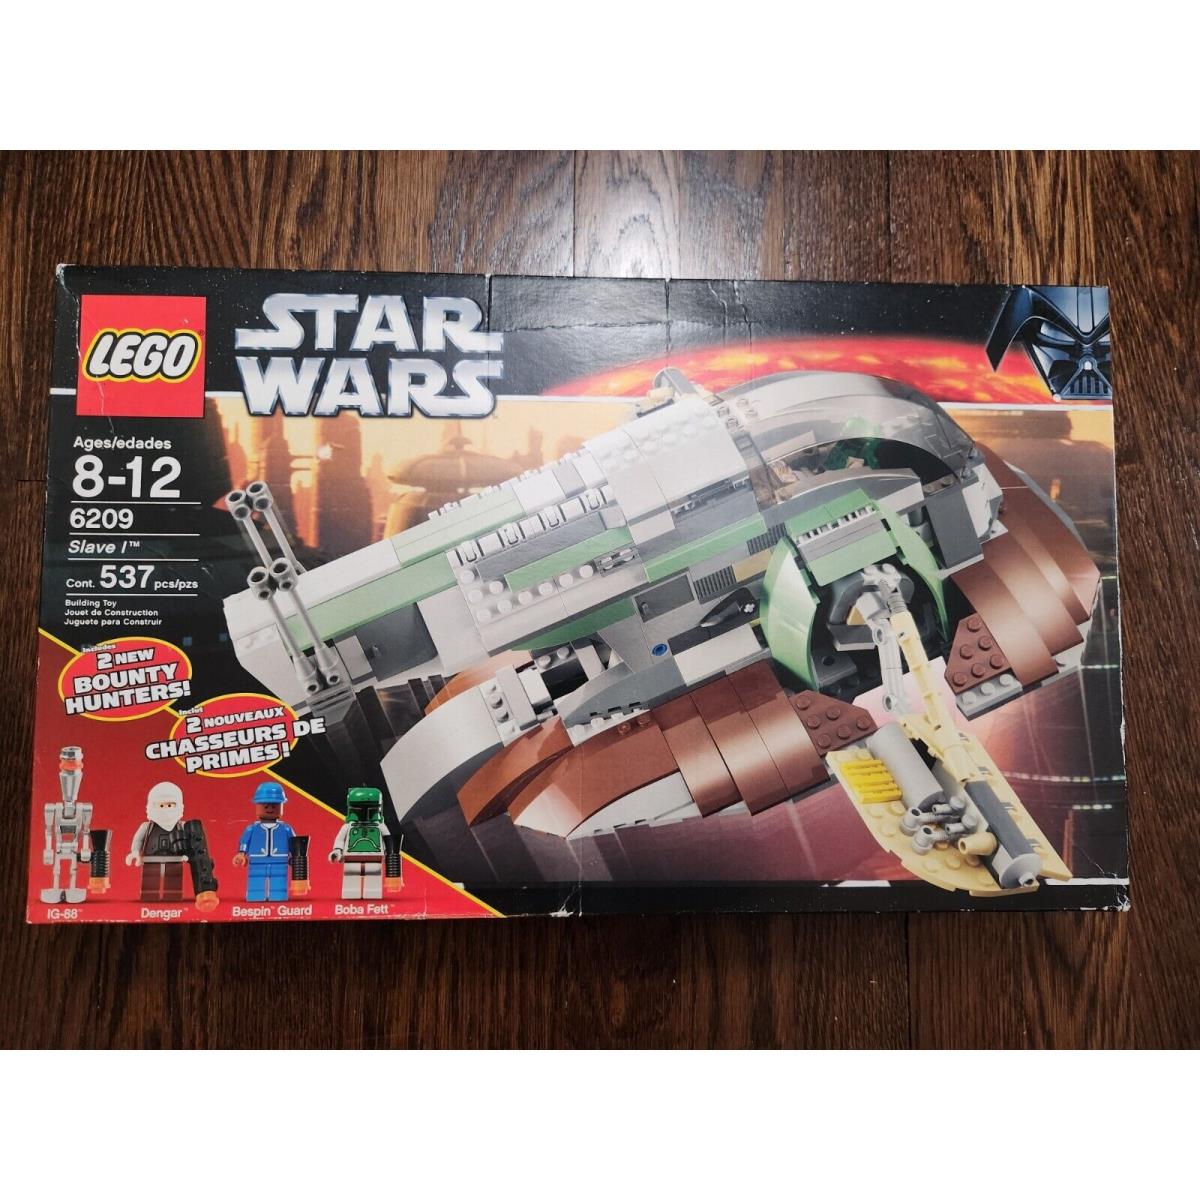 Creases Wear Lego Star Wars: Slave I 6209